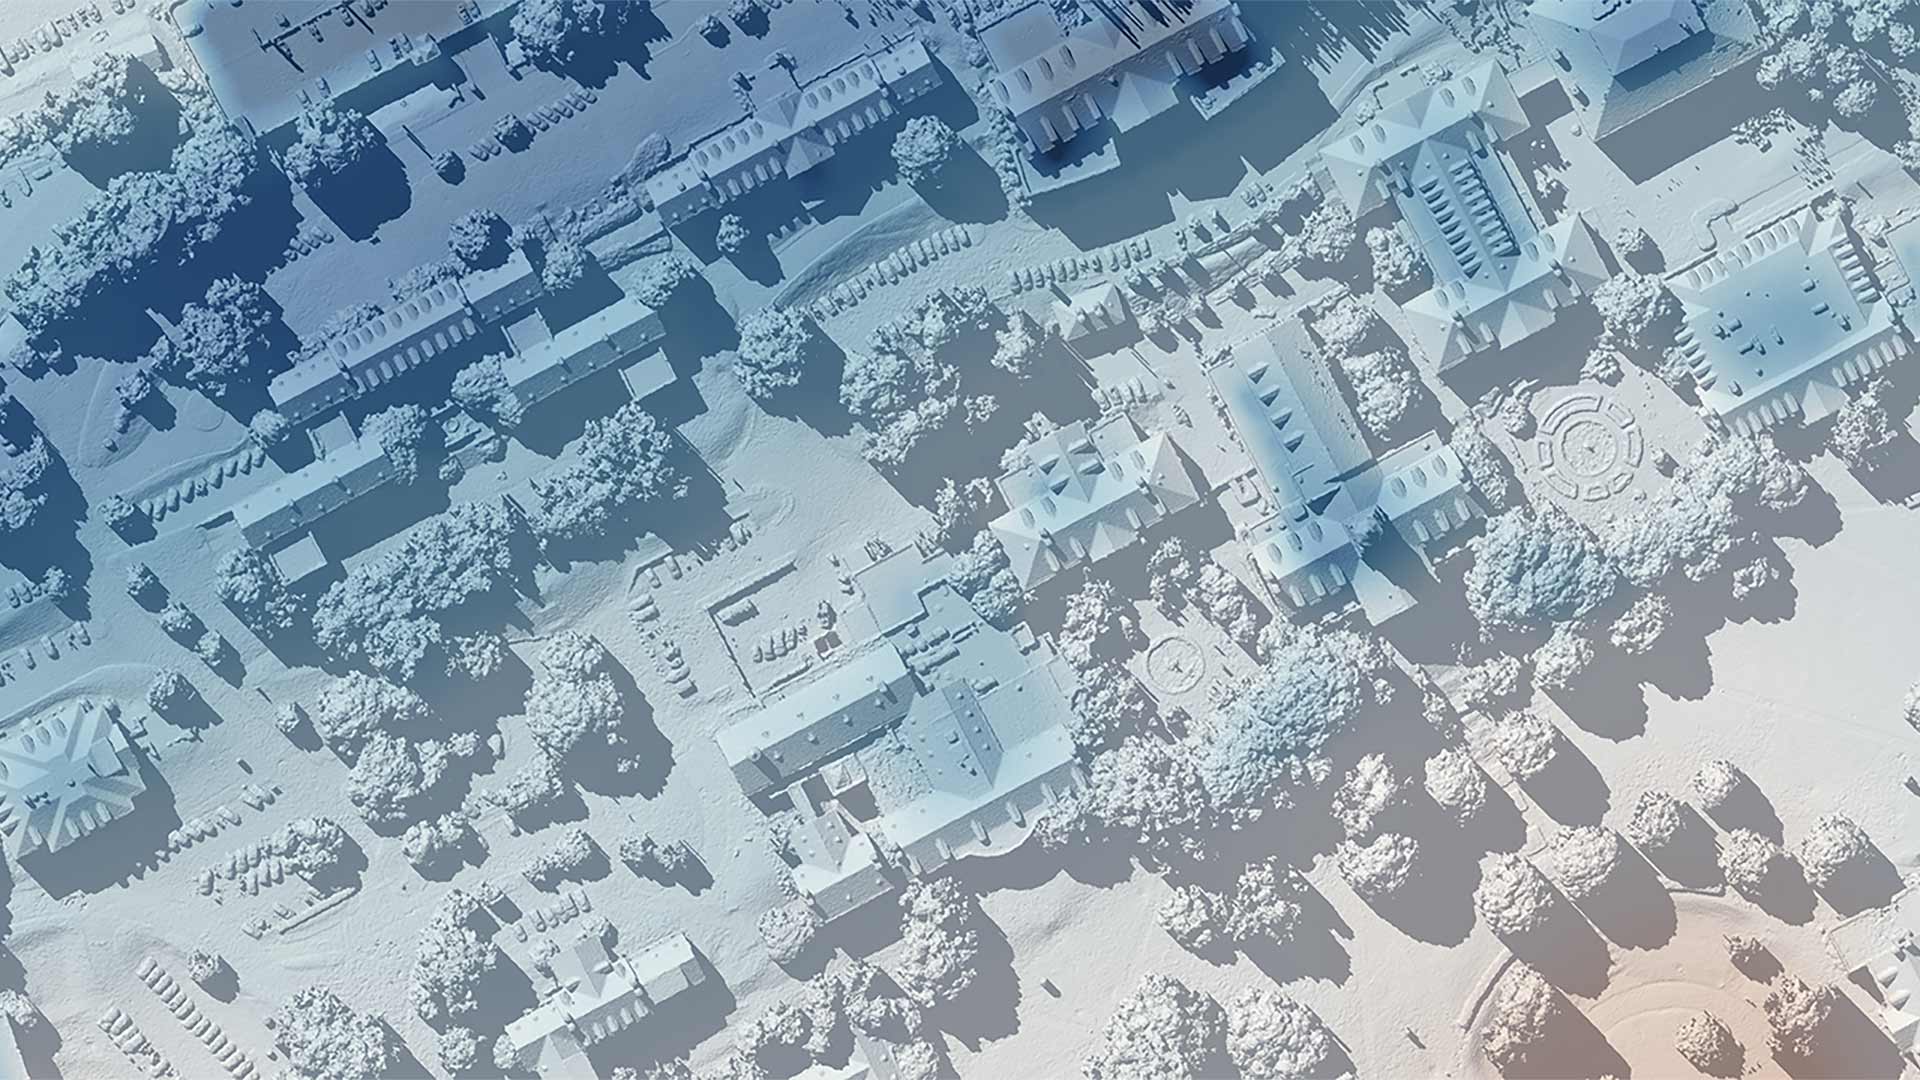 GIS model of Samford campus